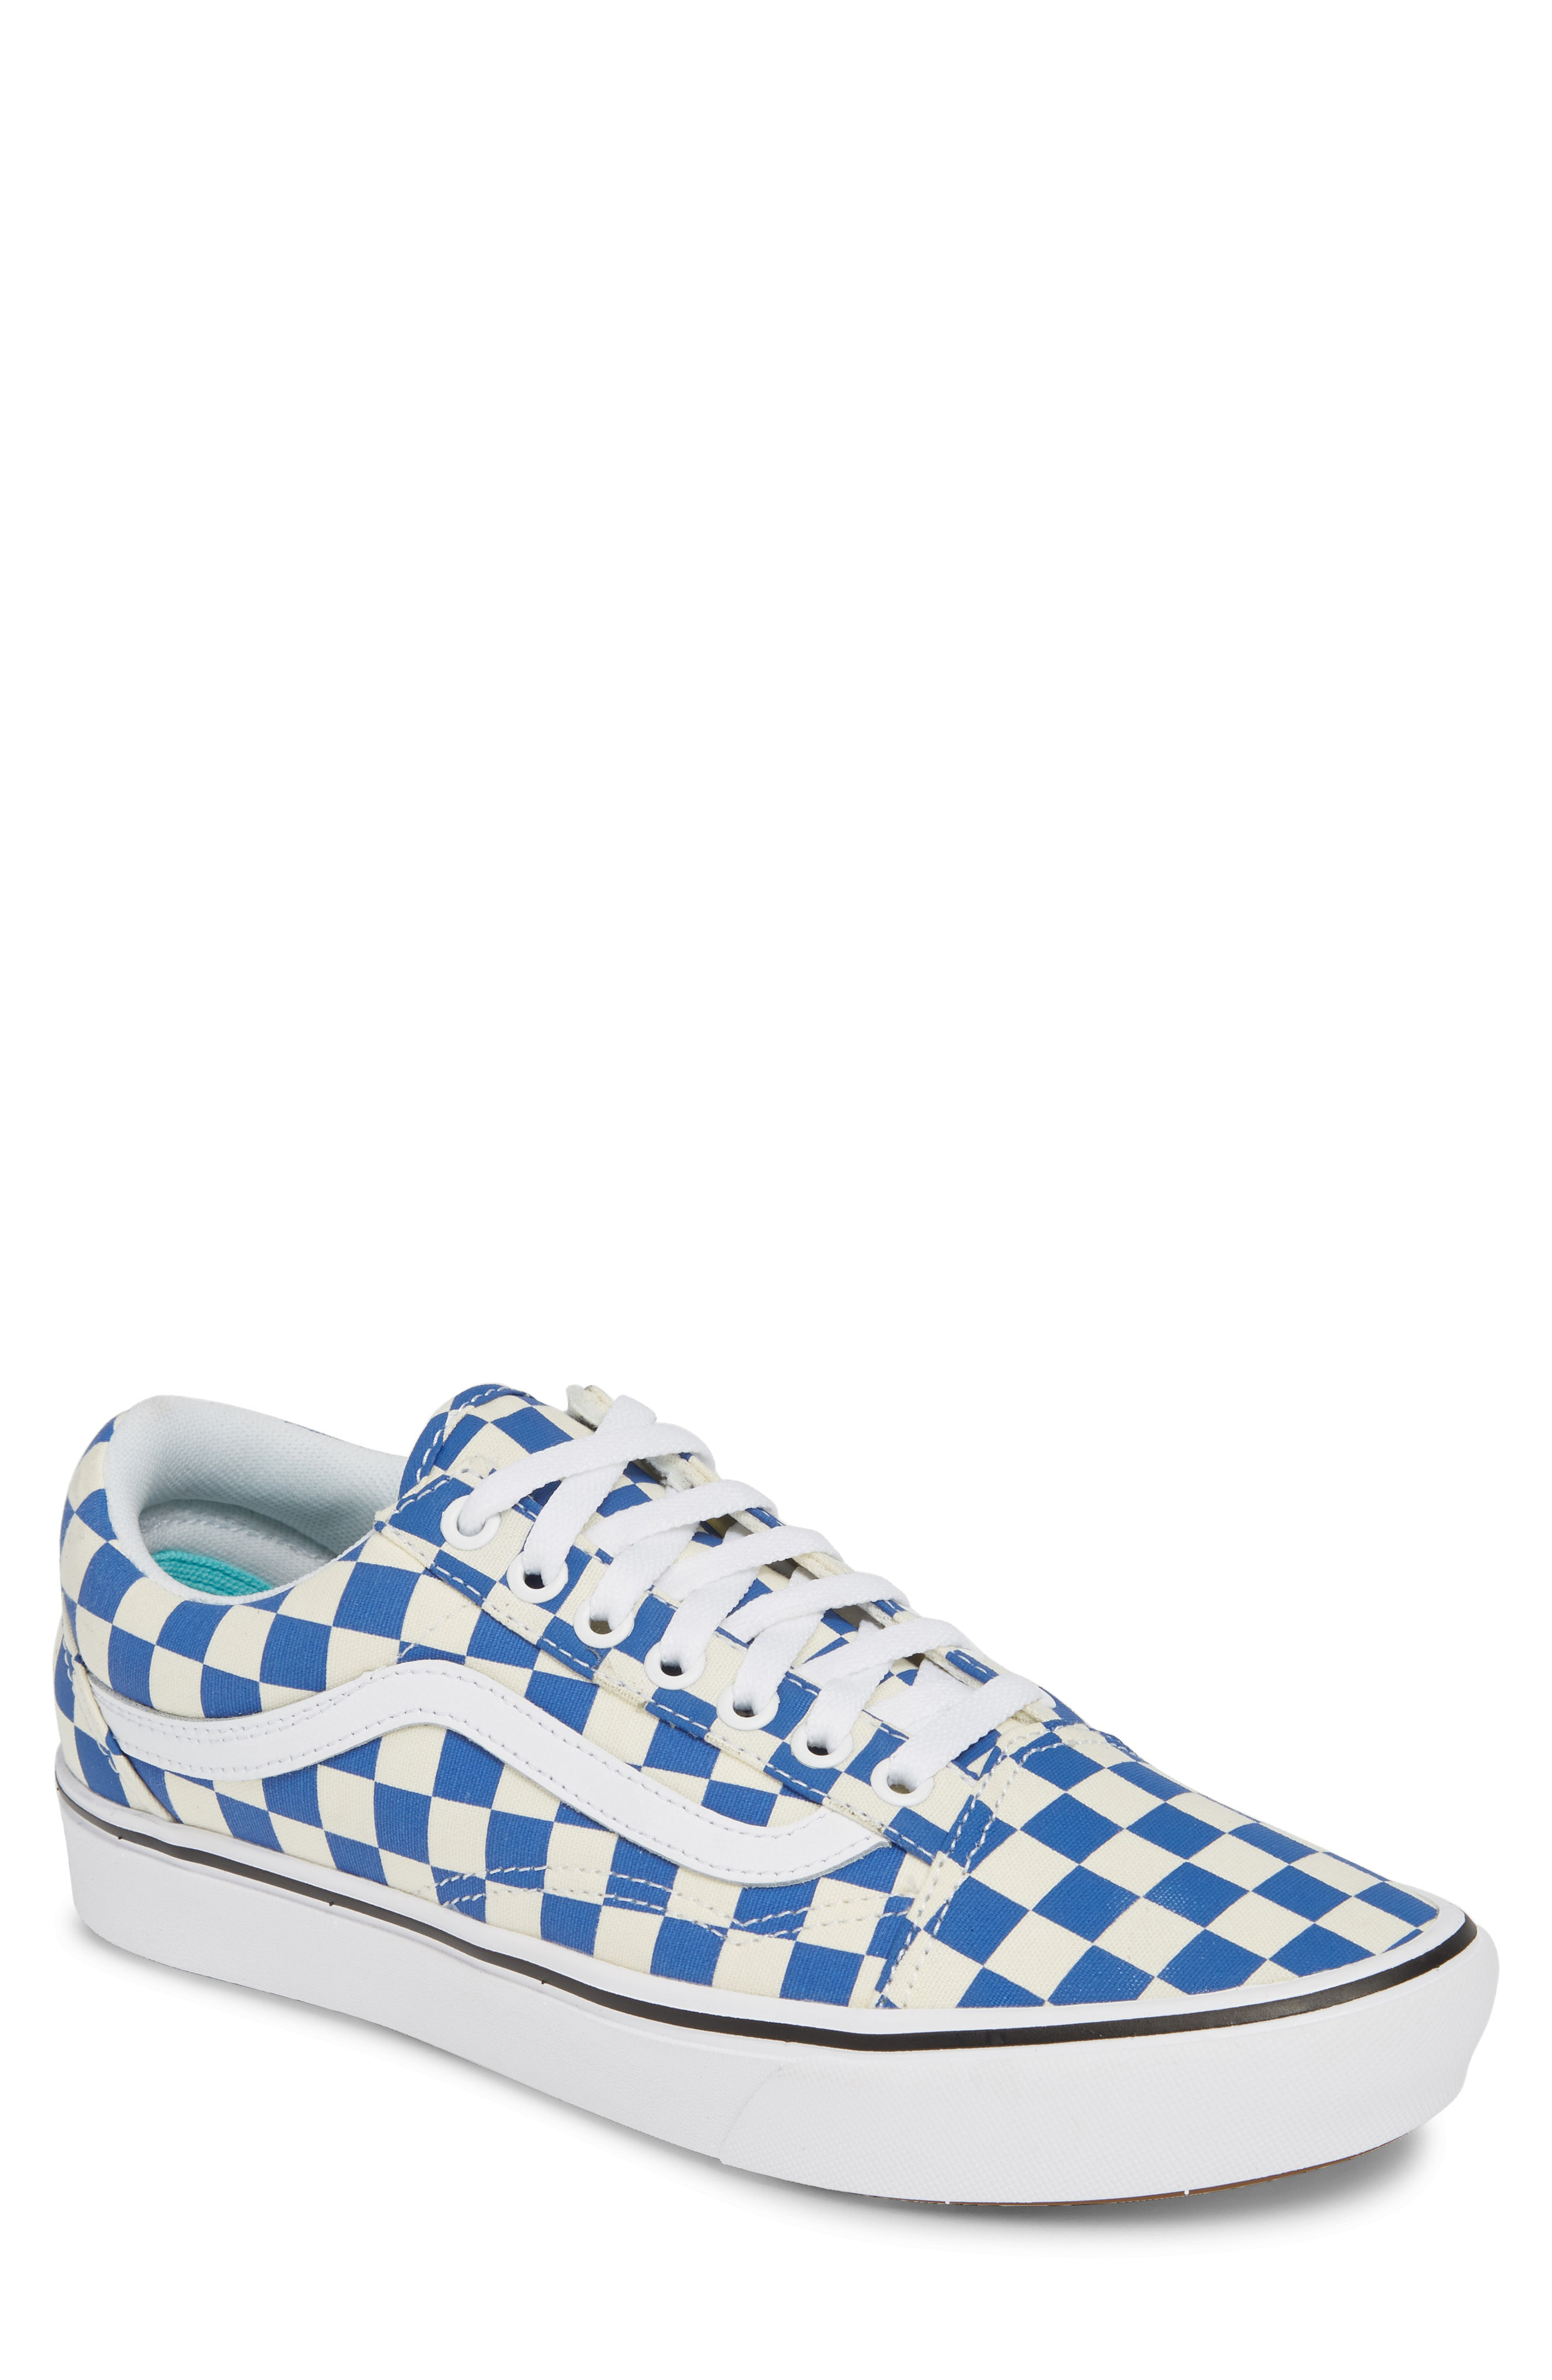 Vans Comfycush Old Skool Sneaker In Blue/ White Checkerboard | ModeSens